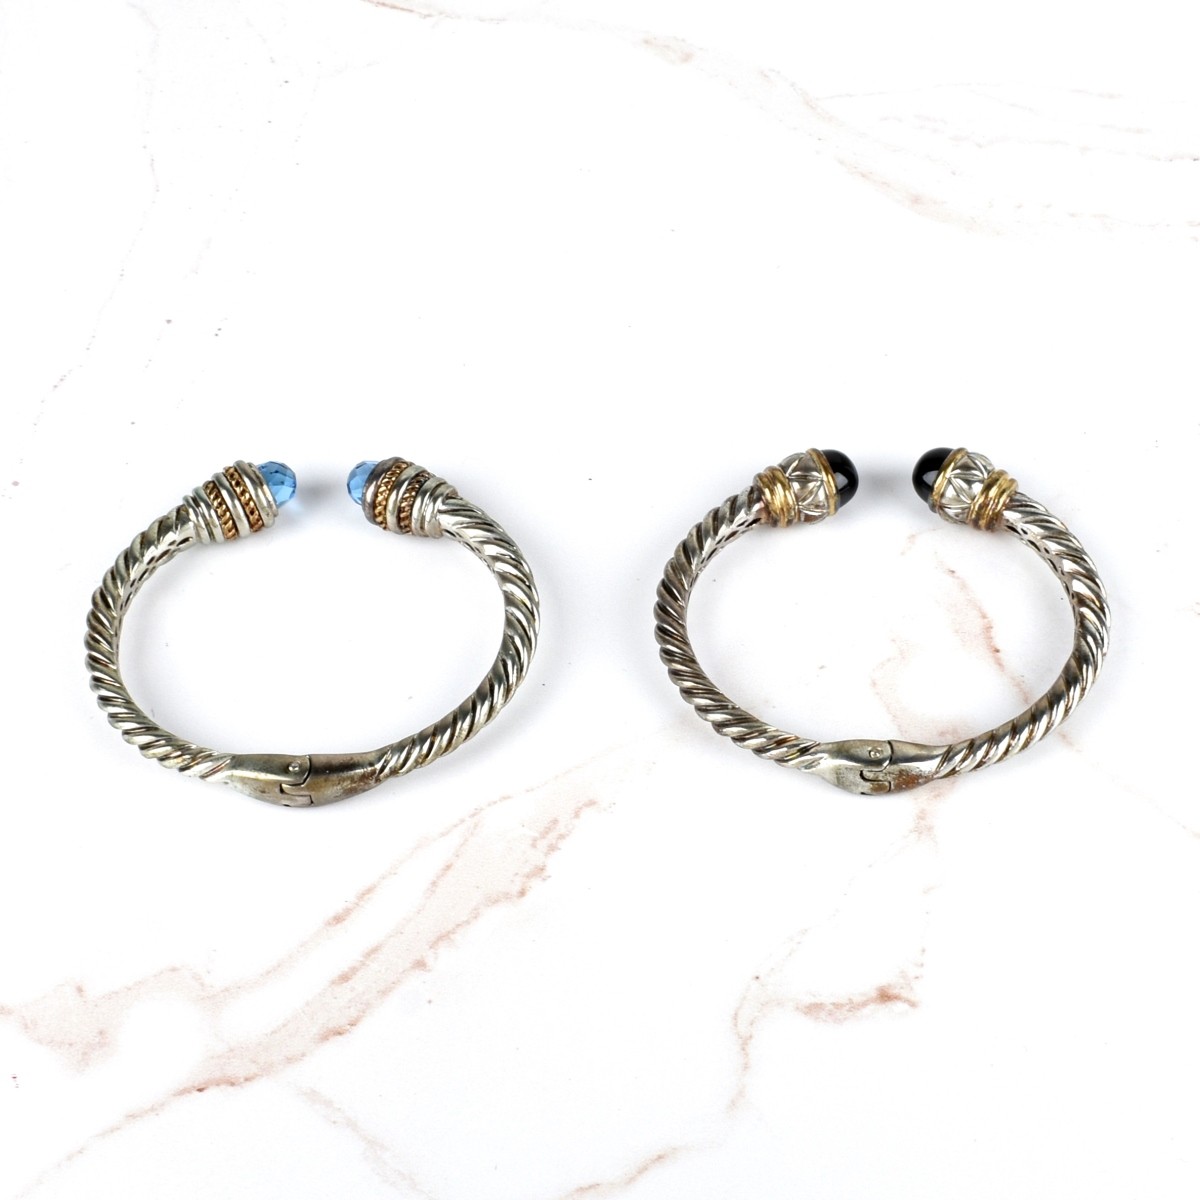 Gemstone, 18K and Silver Bangle Bracelets